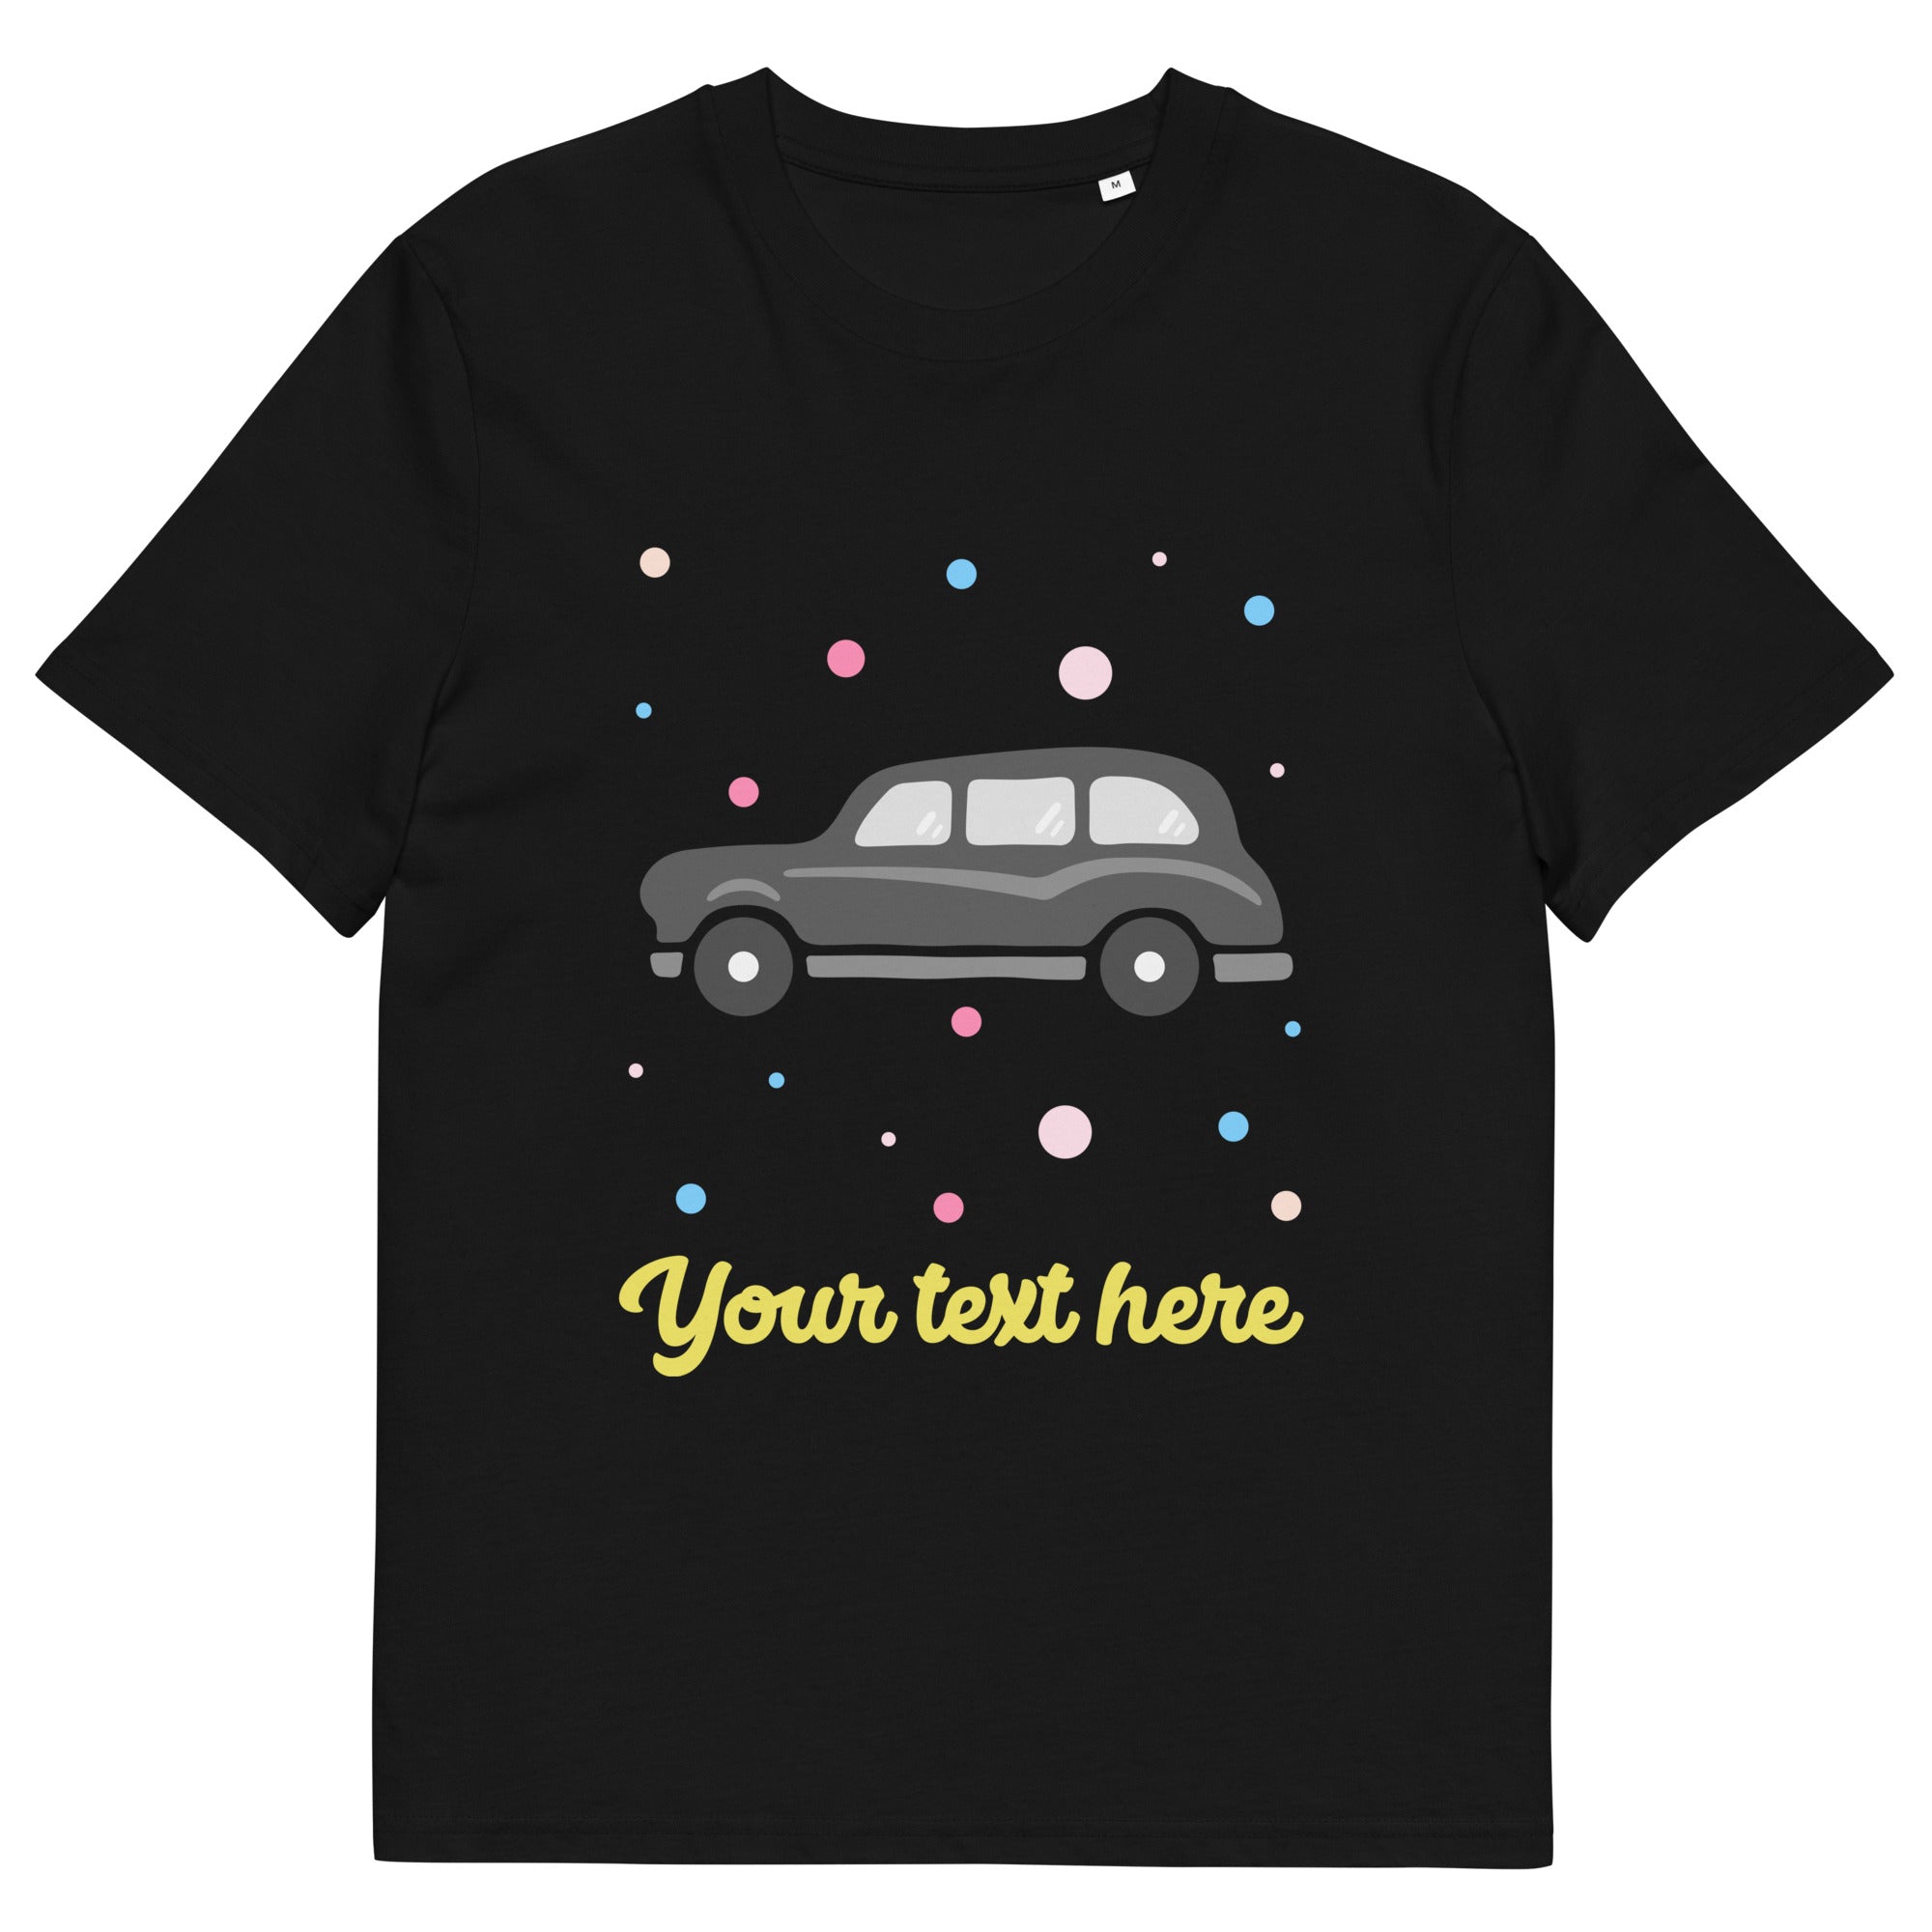 Personalised Custom Text - Organic Cotton Adults Unisex T-Shirt - London Doodles - Black Taxi - Black